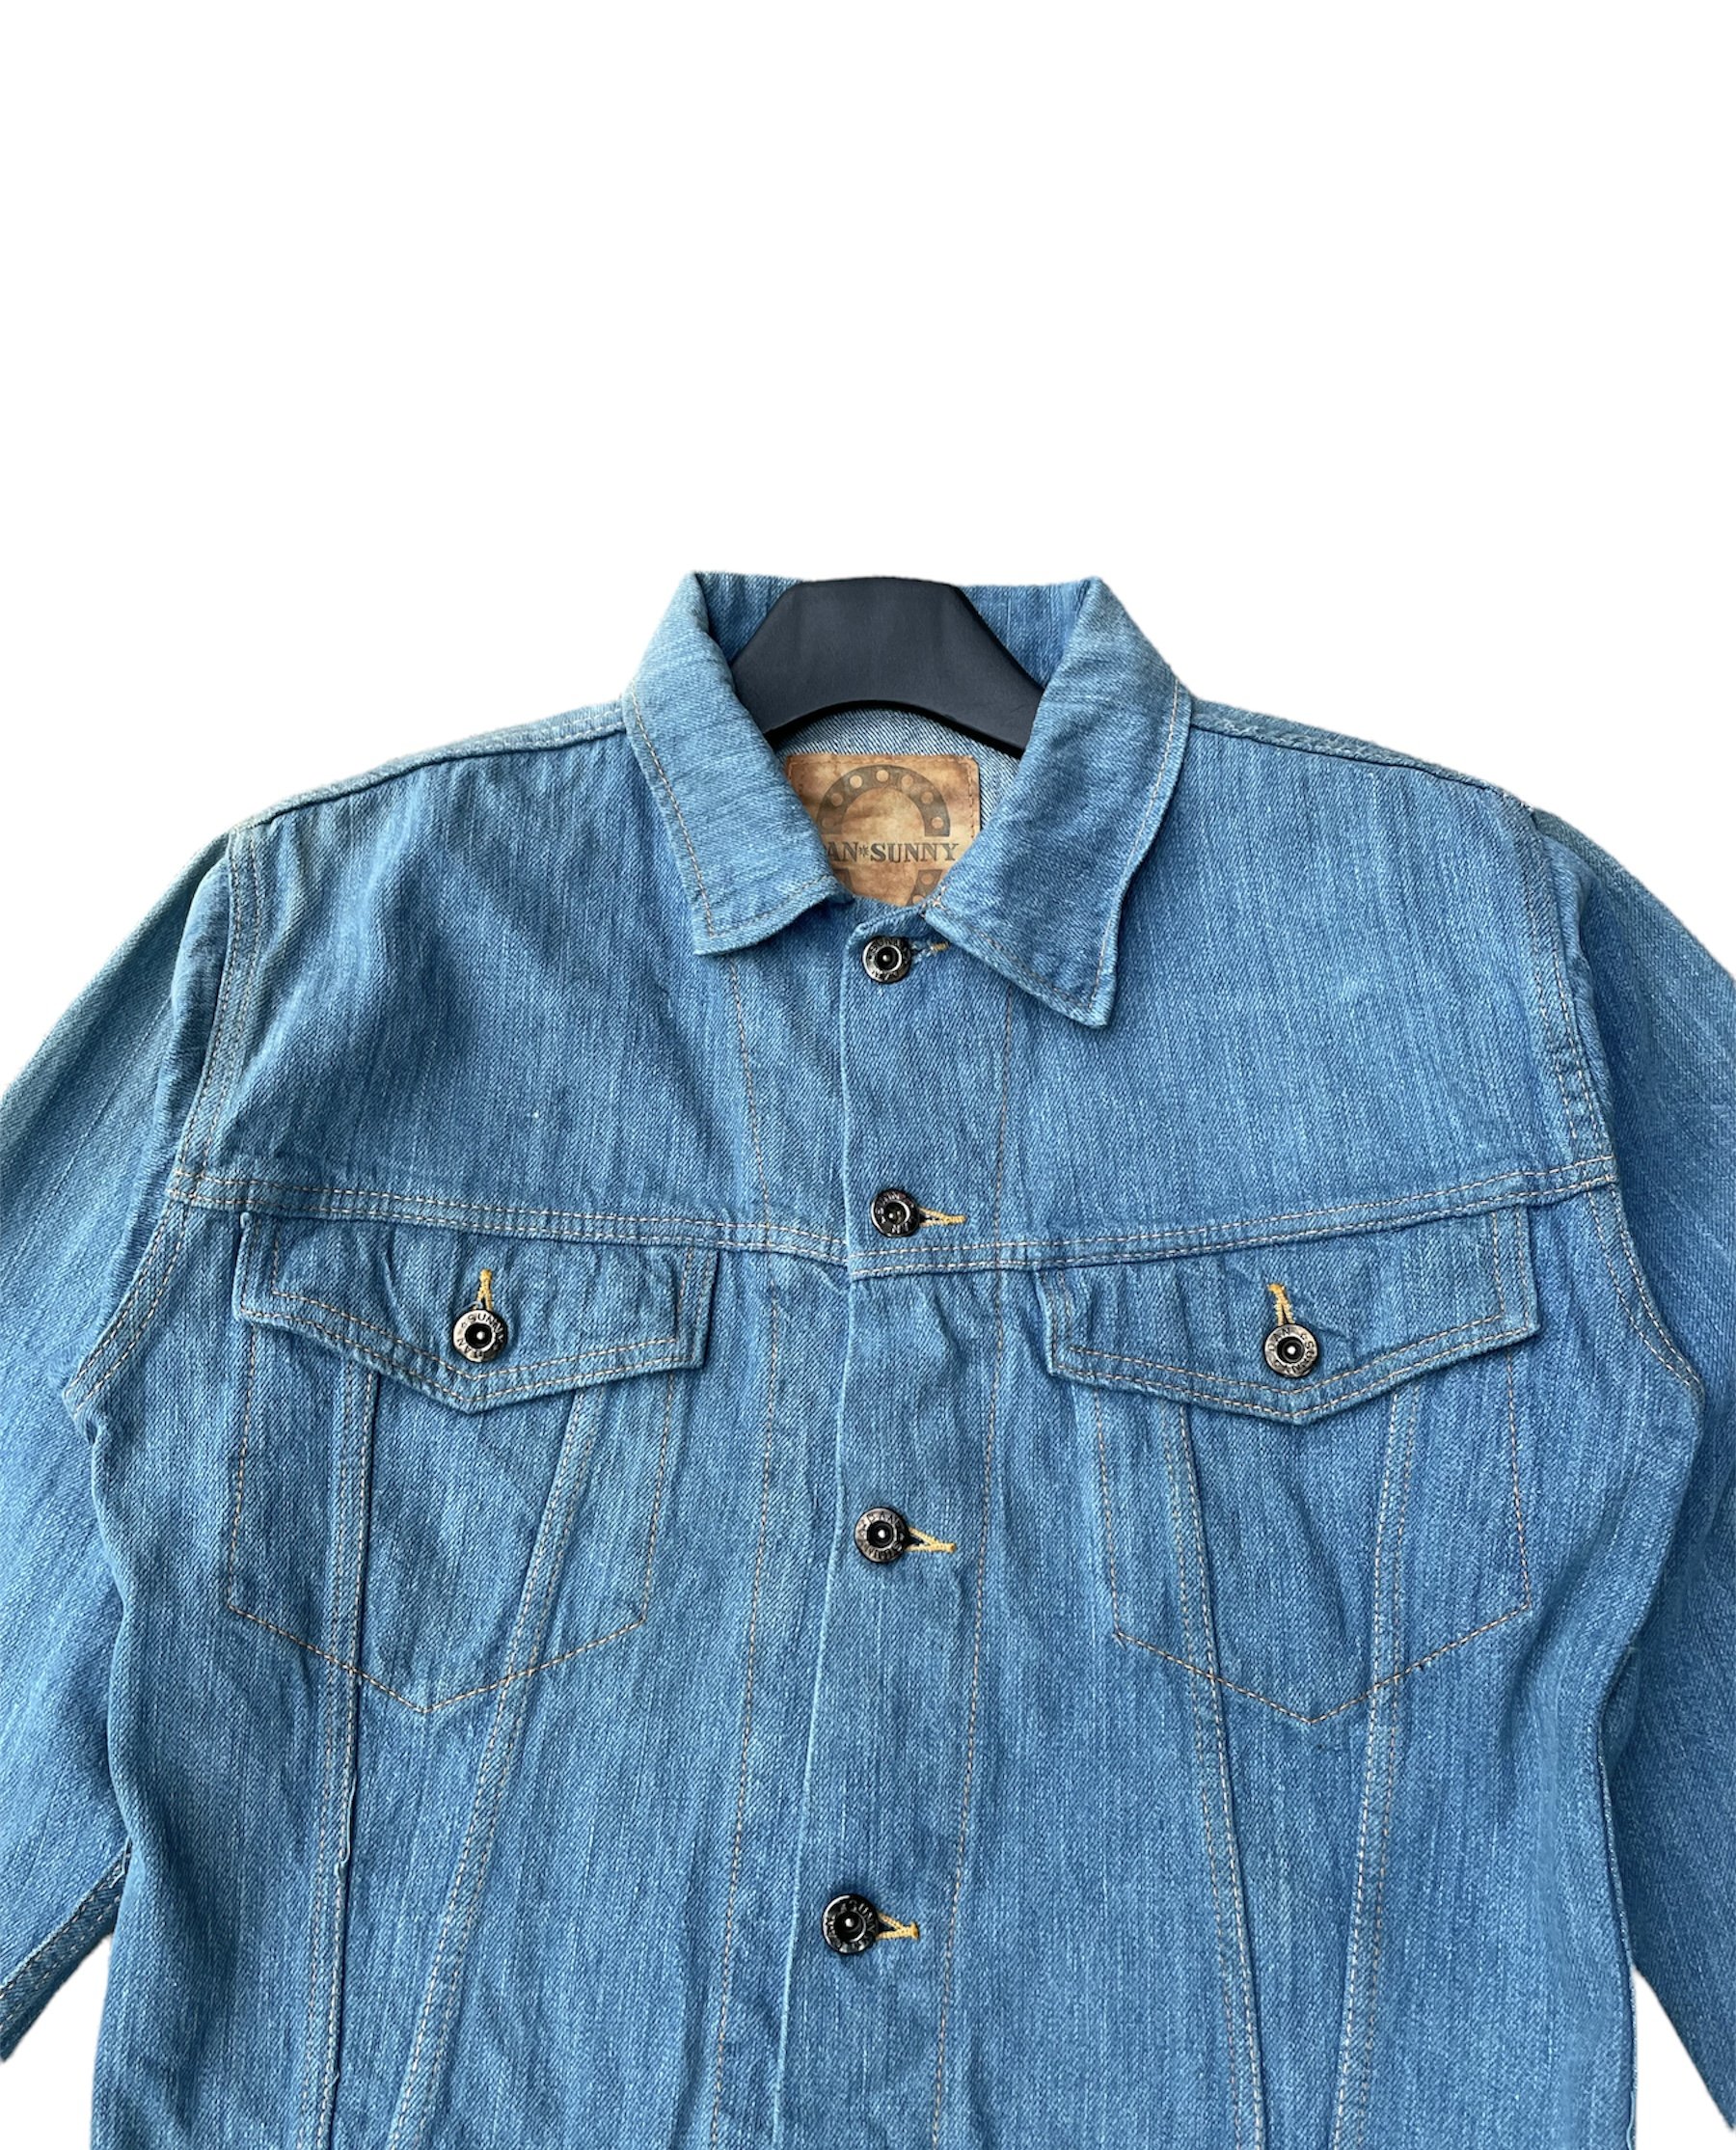 Vintage Dan Sunny Selvedge Denim Jacket